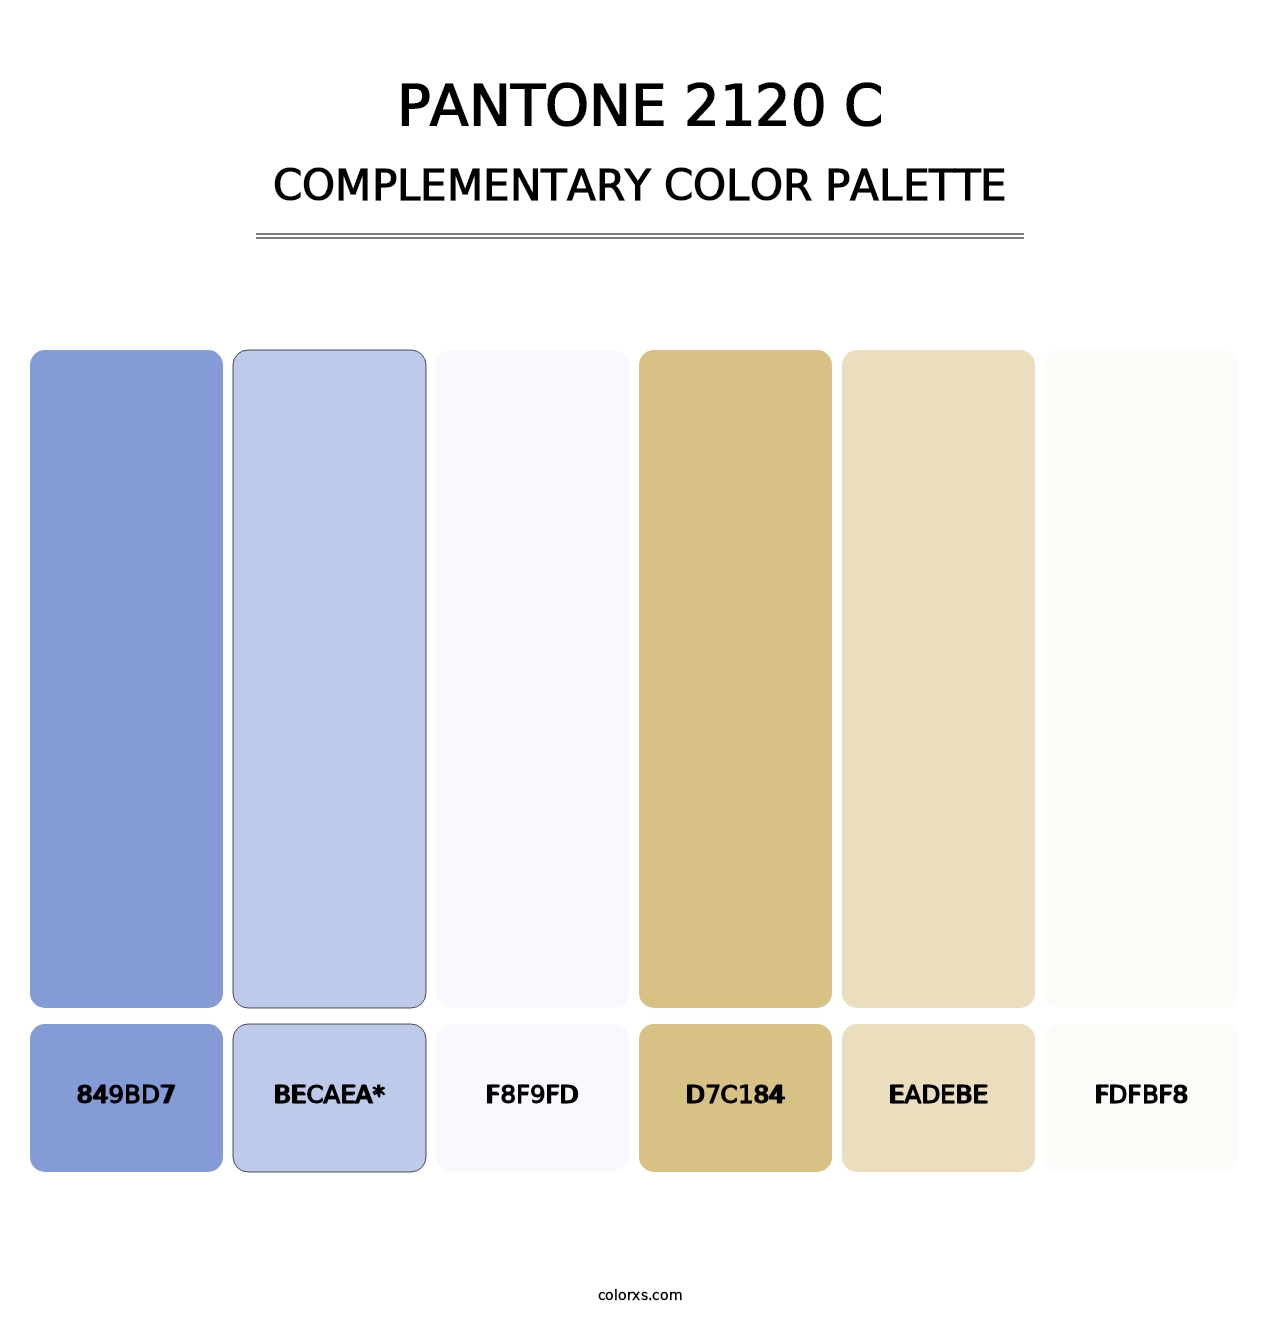 PANTONE 2120 C - Complementary Color Palette